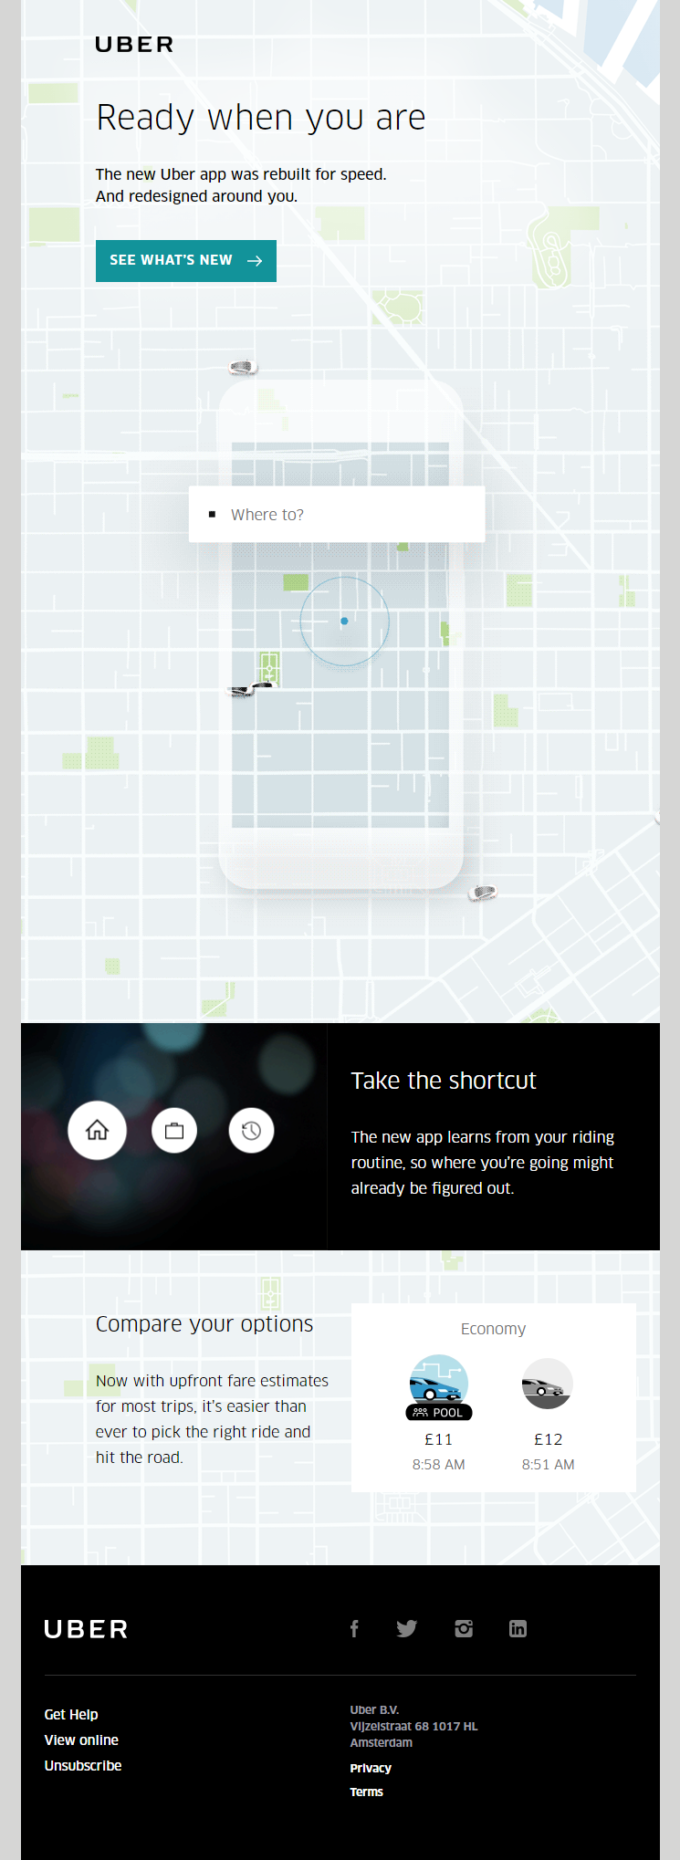 Meet the new Uber app